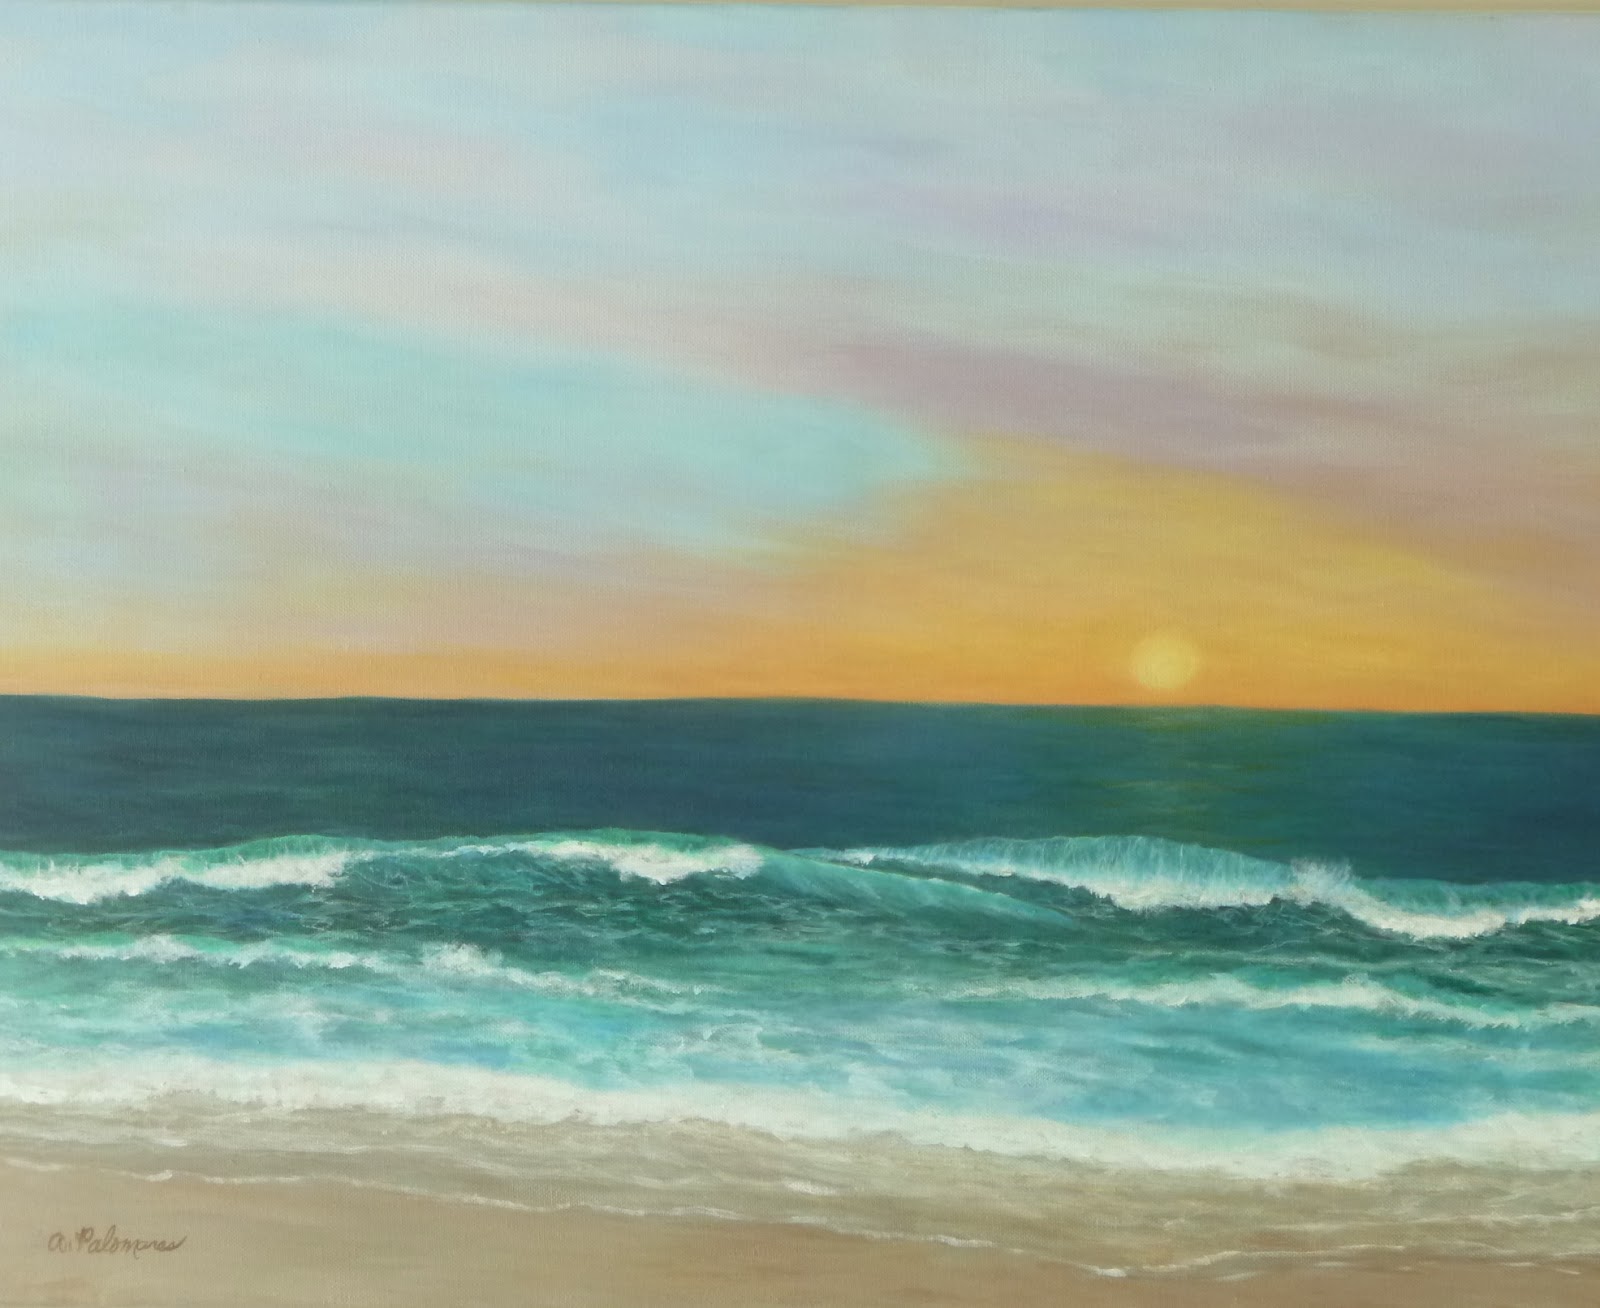 Beach Sunset Painting | Amber Palomares Coastal and Nature Paintings